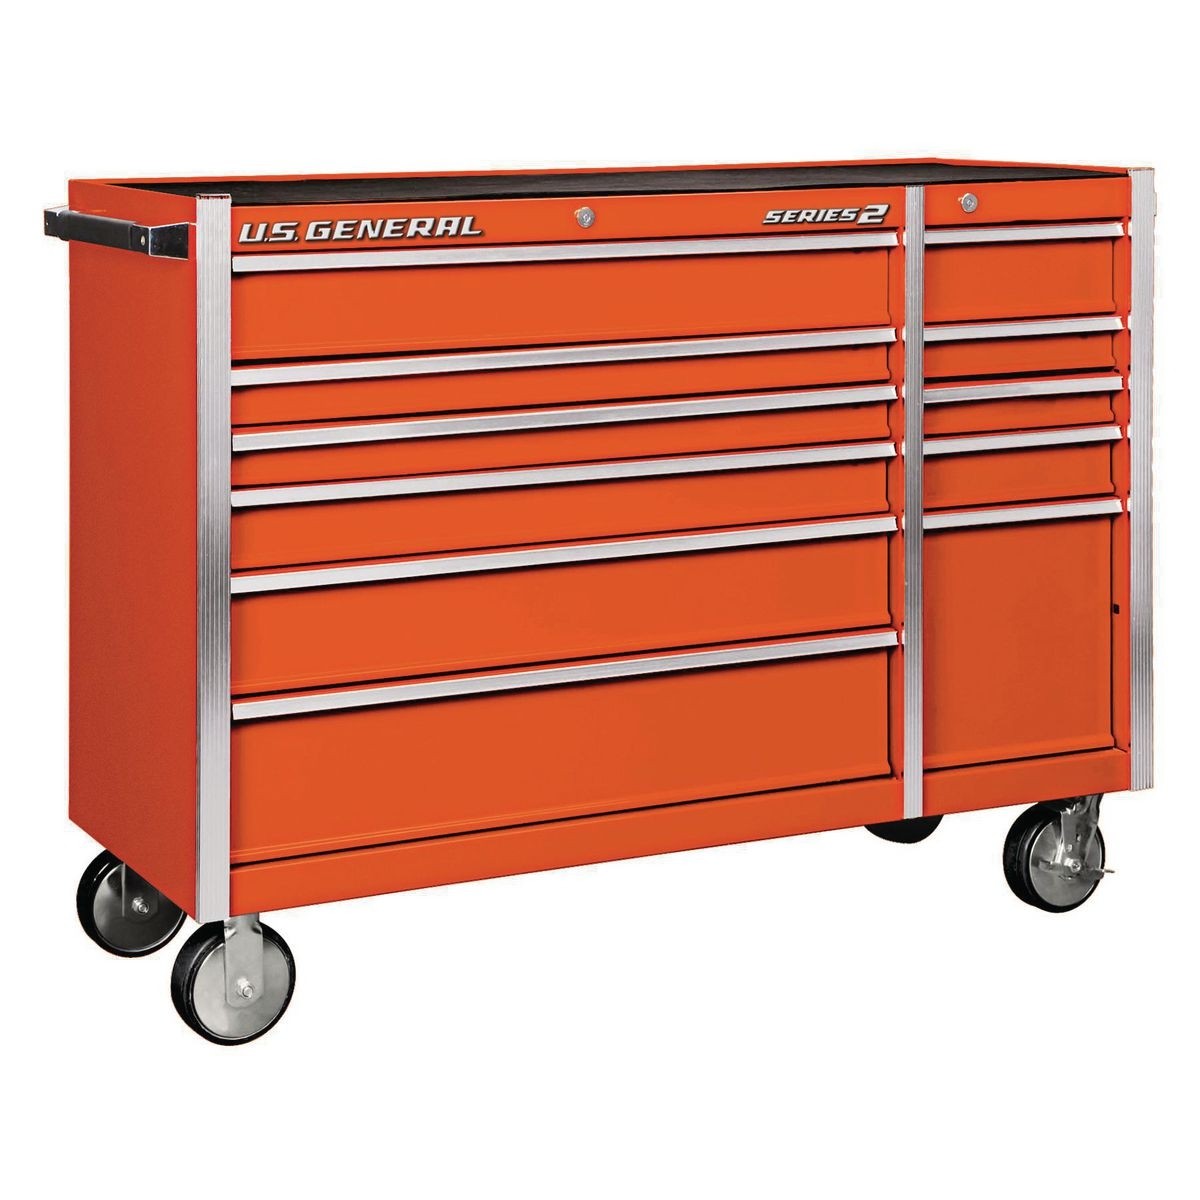 U.S. GENERAL 56 In. Double Bank Roller Cabinet – Orange – Item 56111